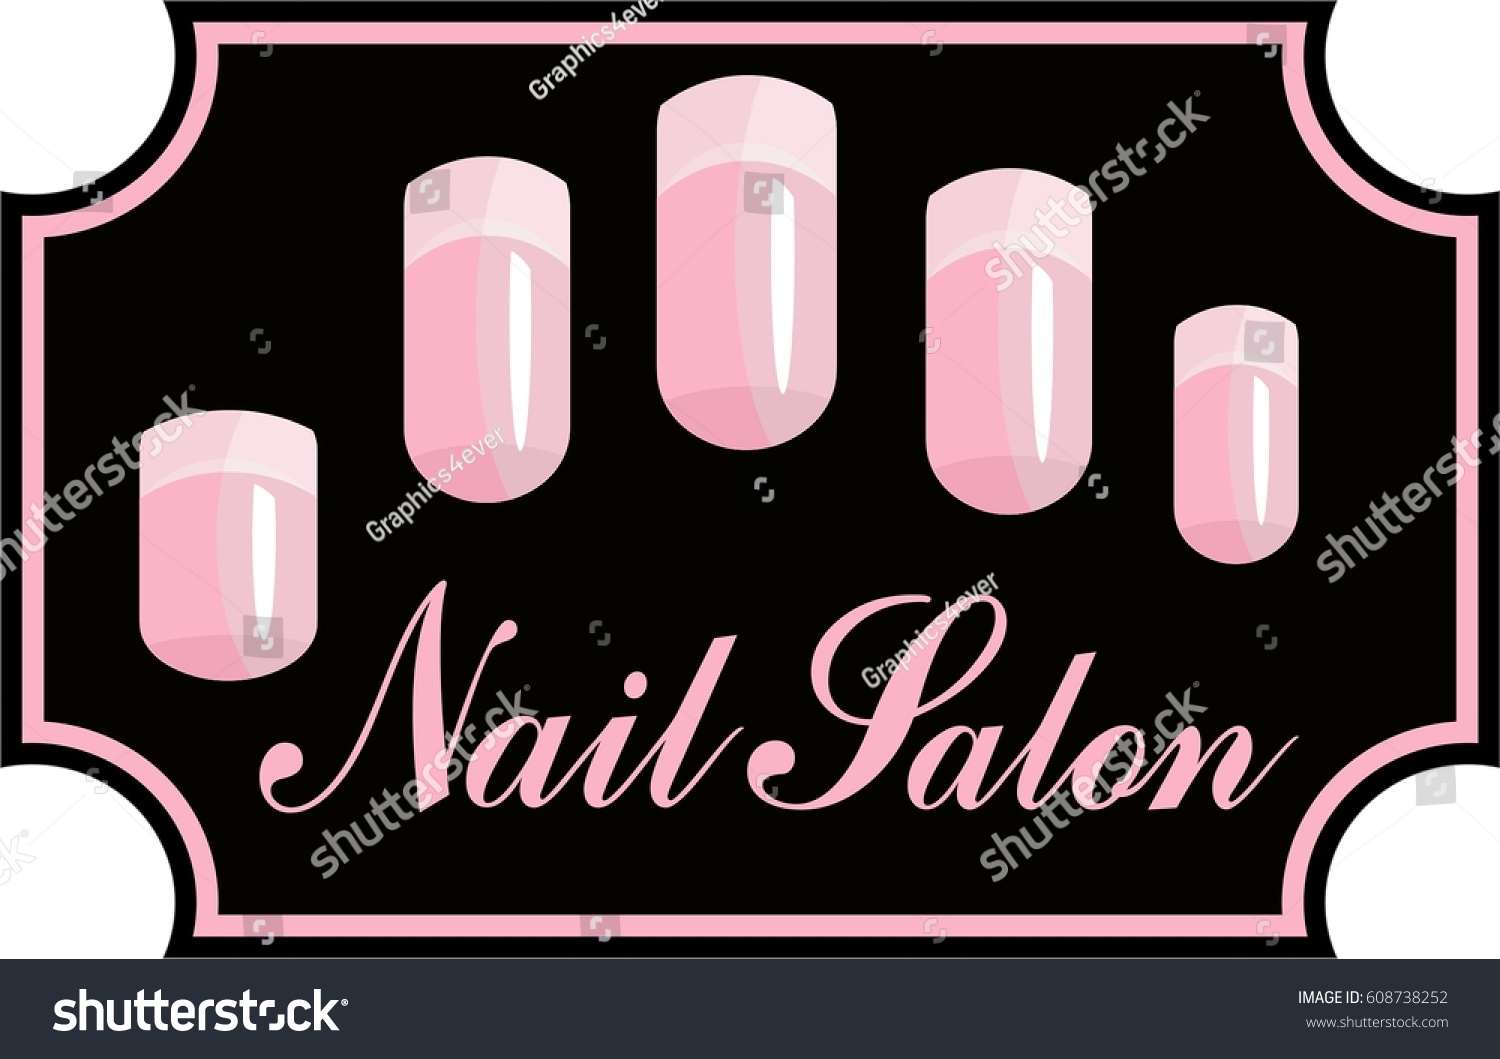 9. Free Nail Salon Logo Design Services - wide 3